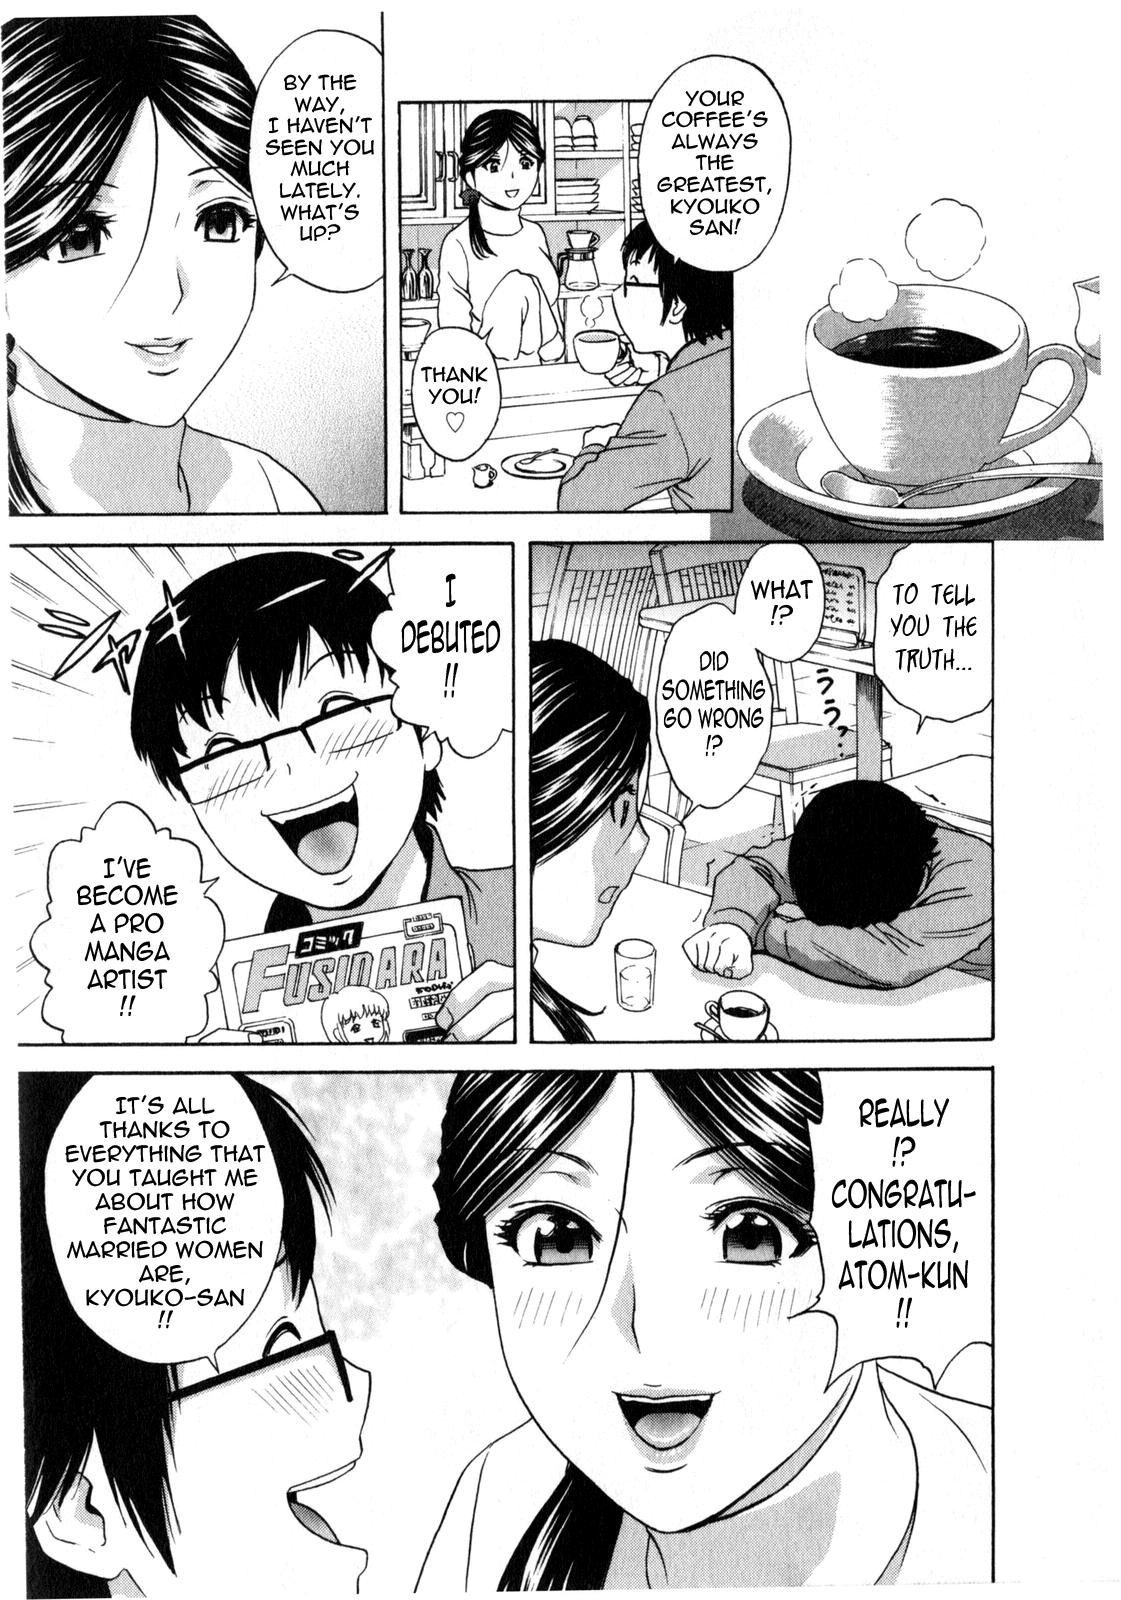 [Hidemaru] Life with Married Women Just Like a Manga 2 - Ch. 1-8 [English] {Tadanohito} 48